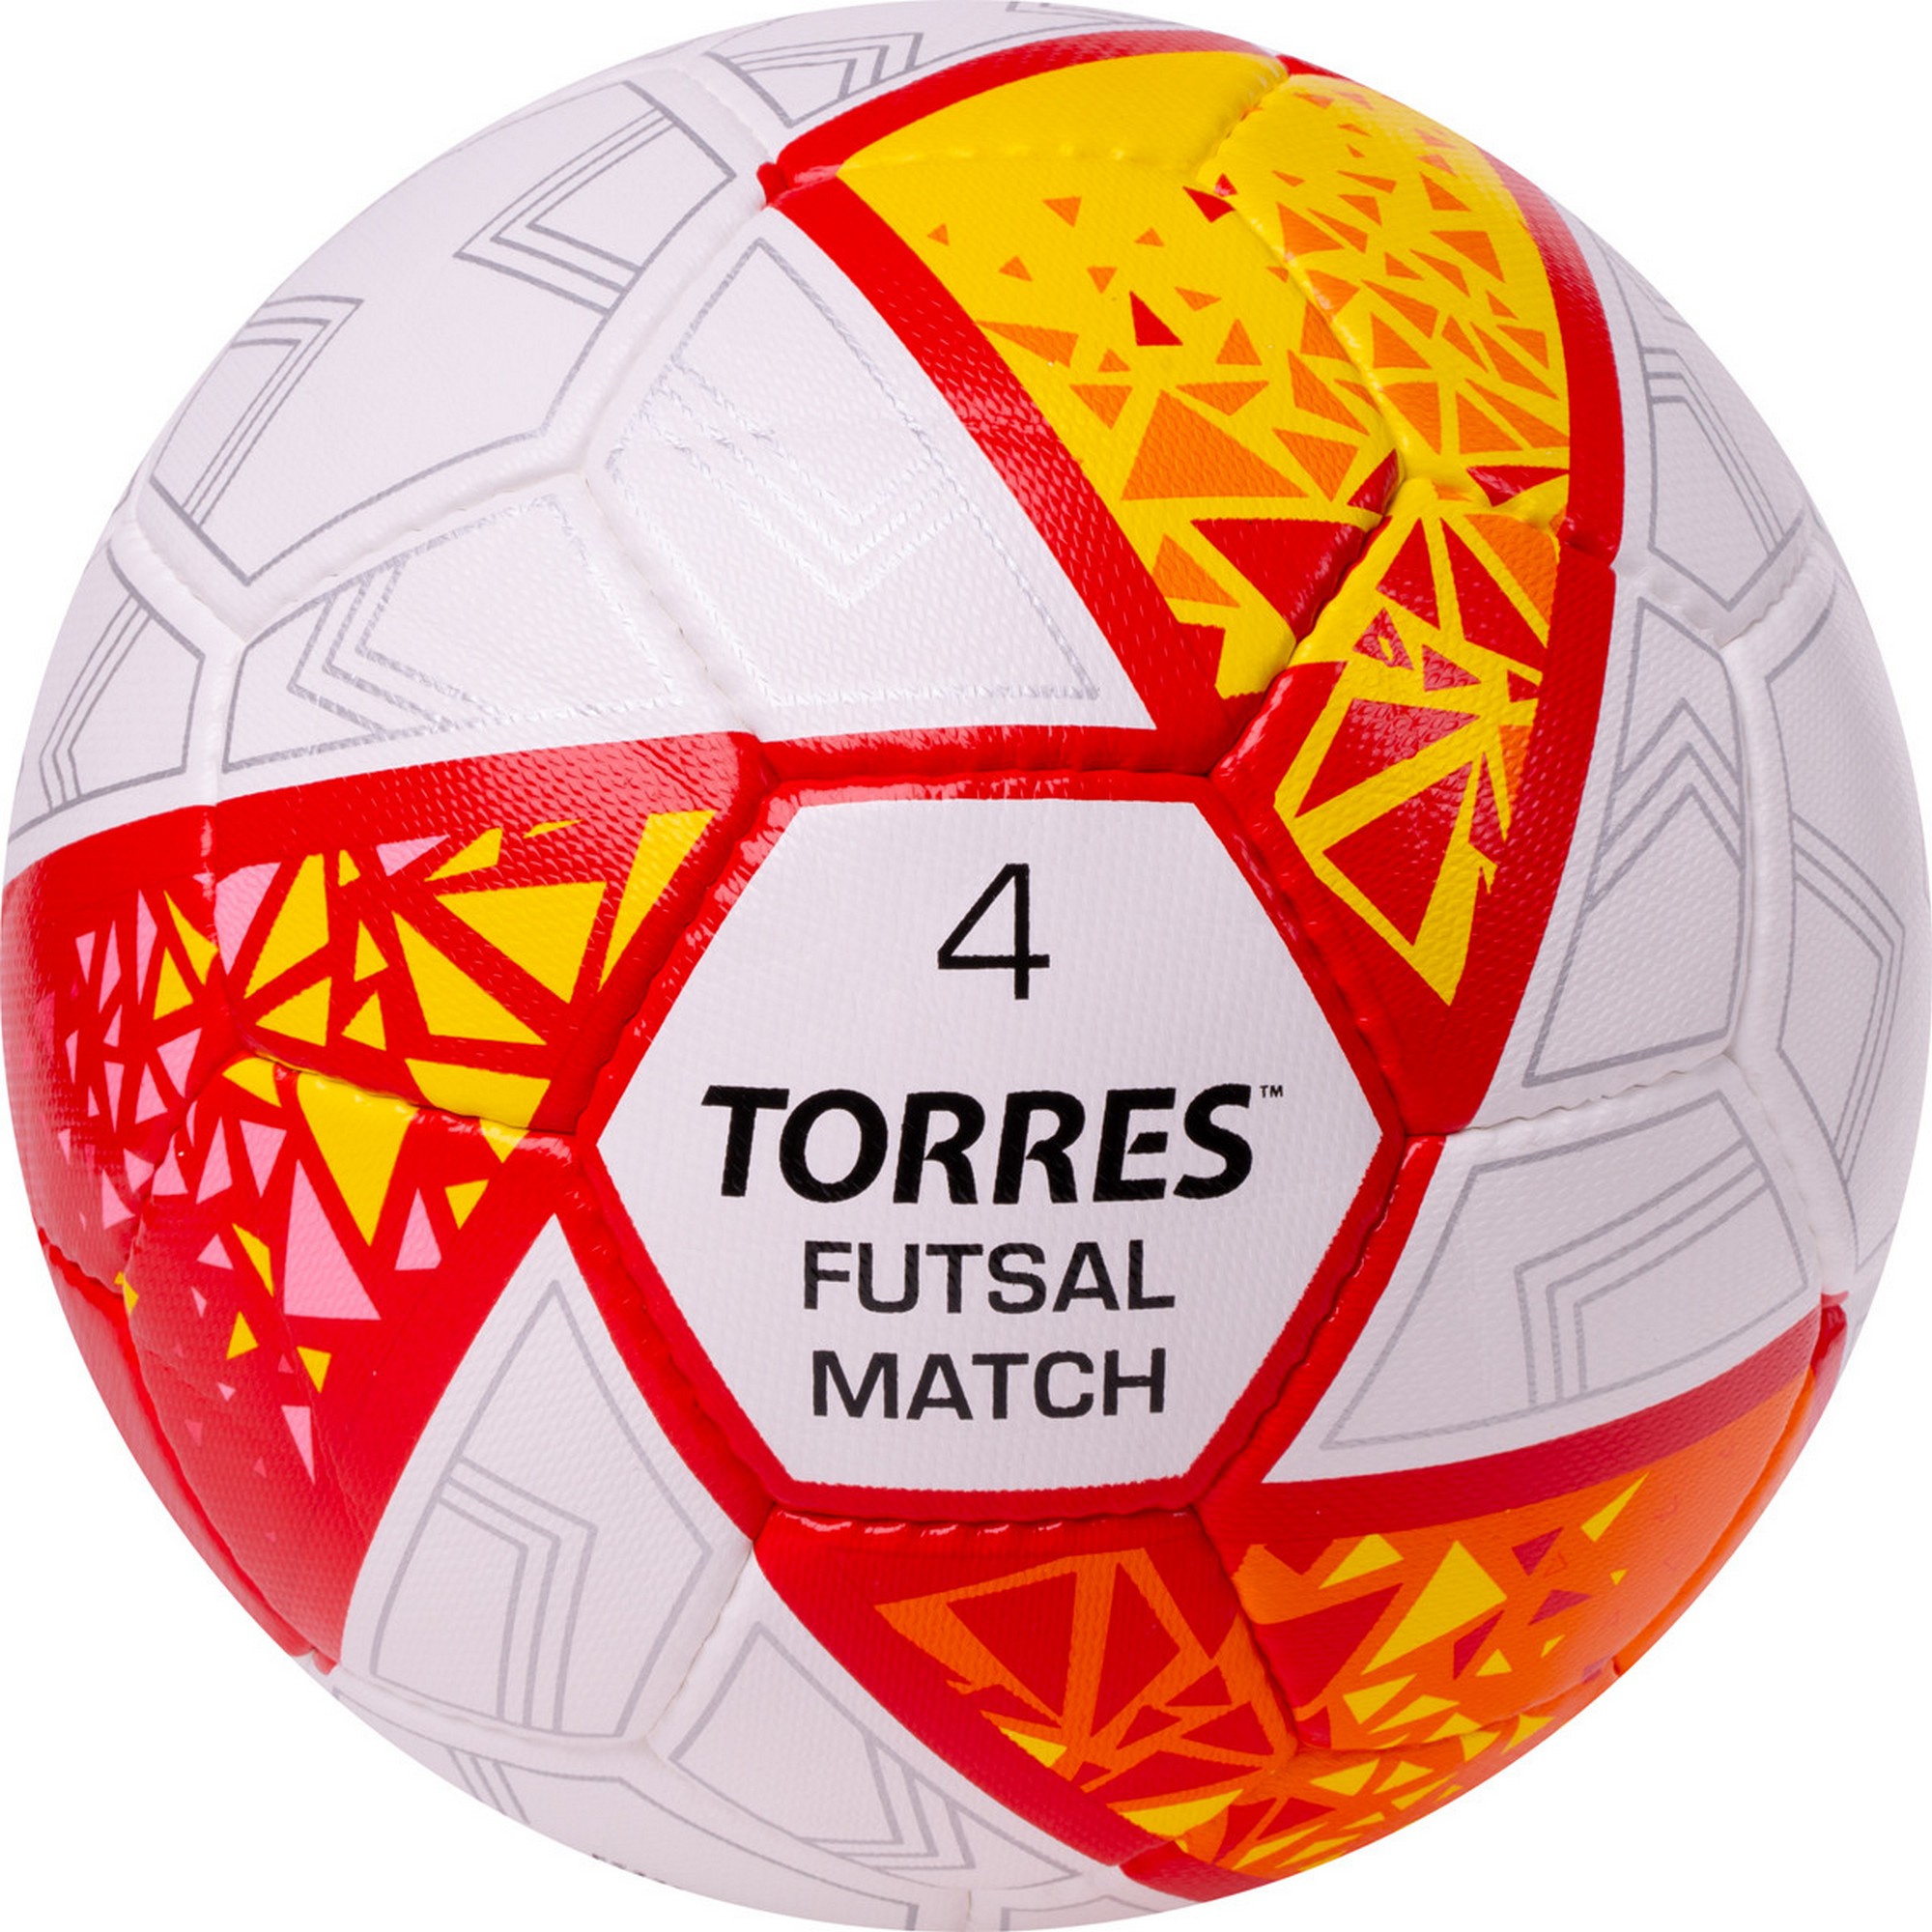   Torres Futsal Match FS323774 .4